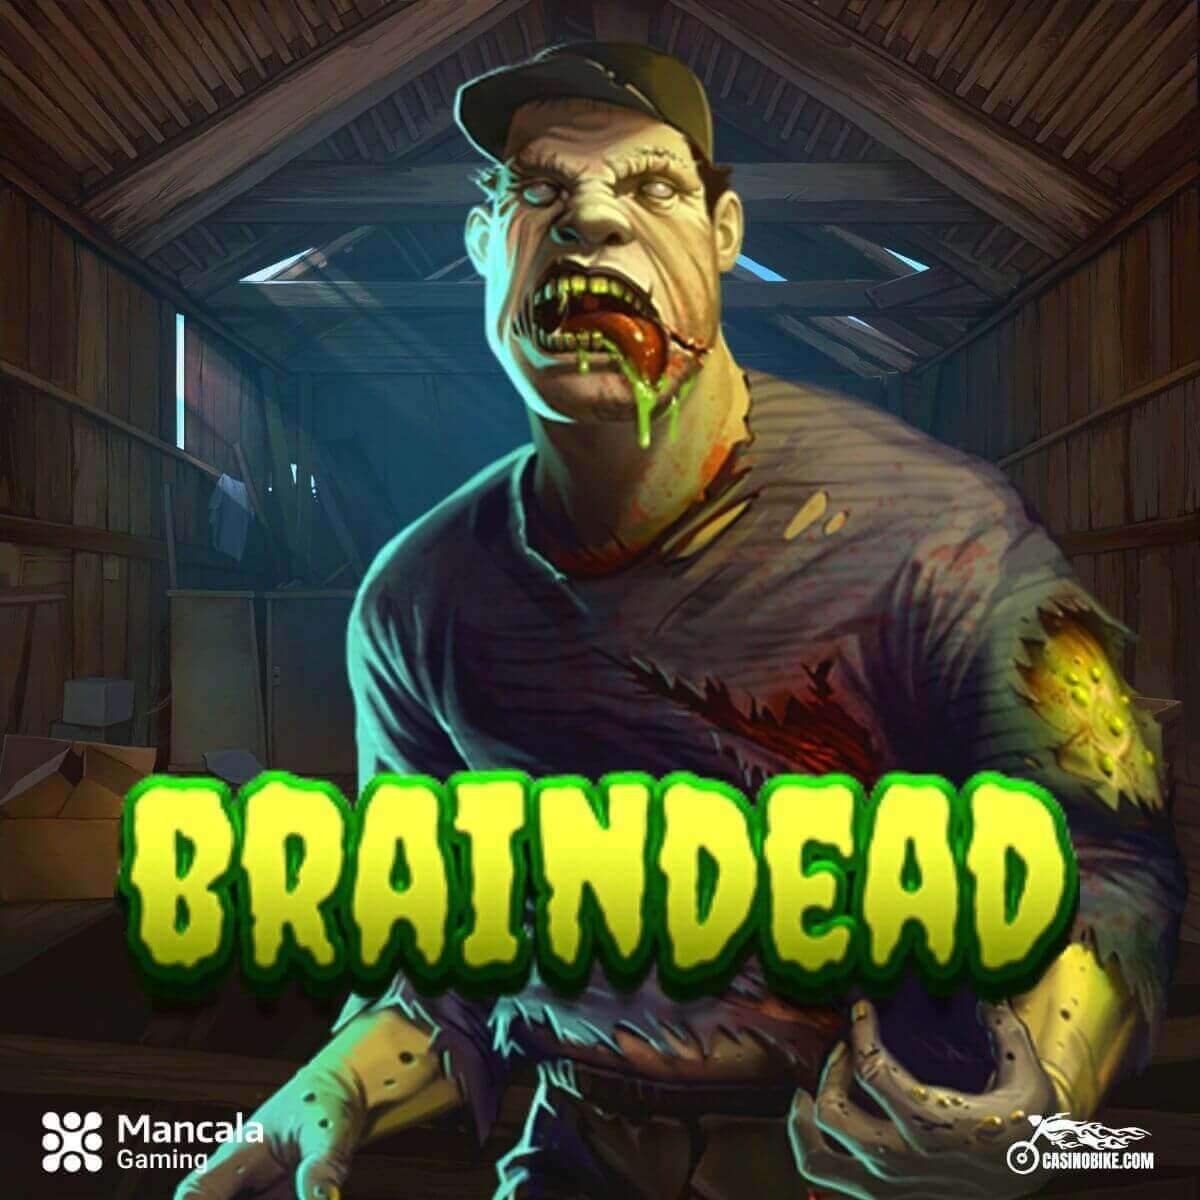 Braindead Slot by Mancala Gaming